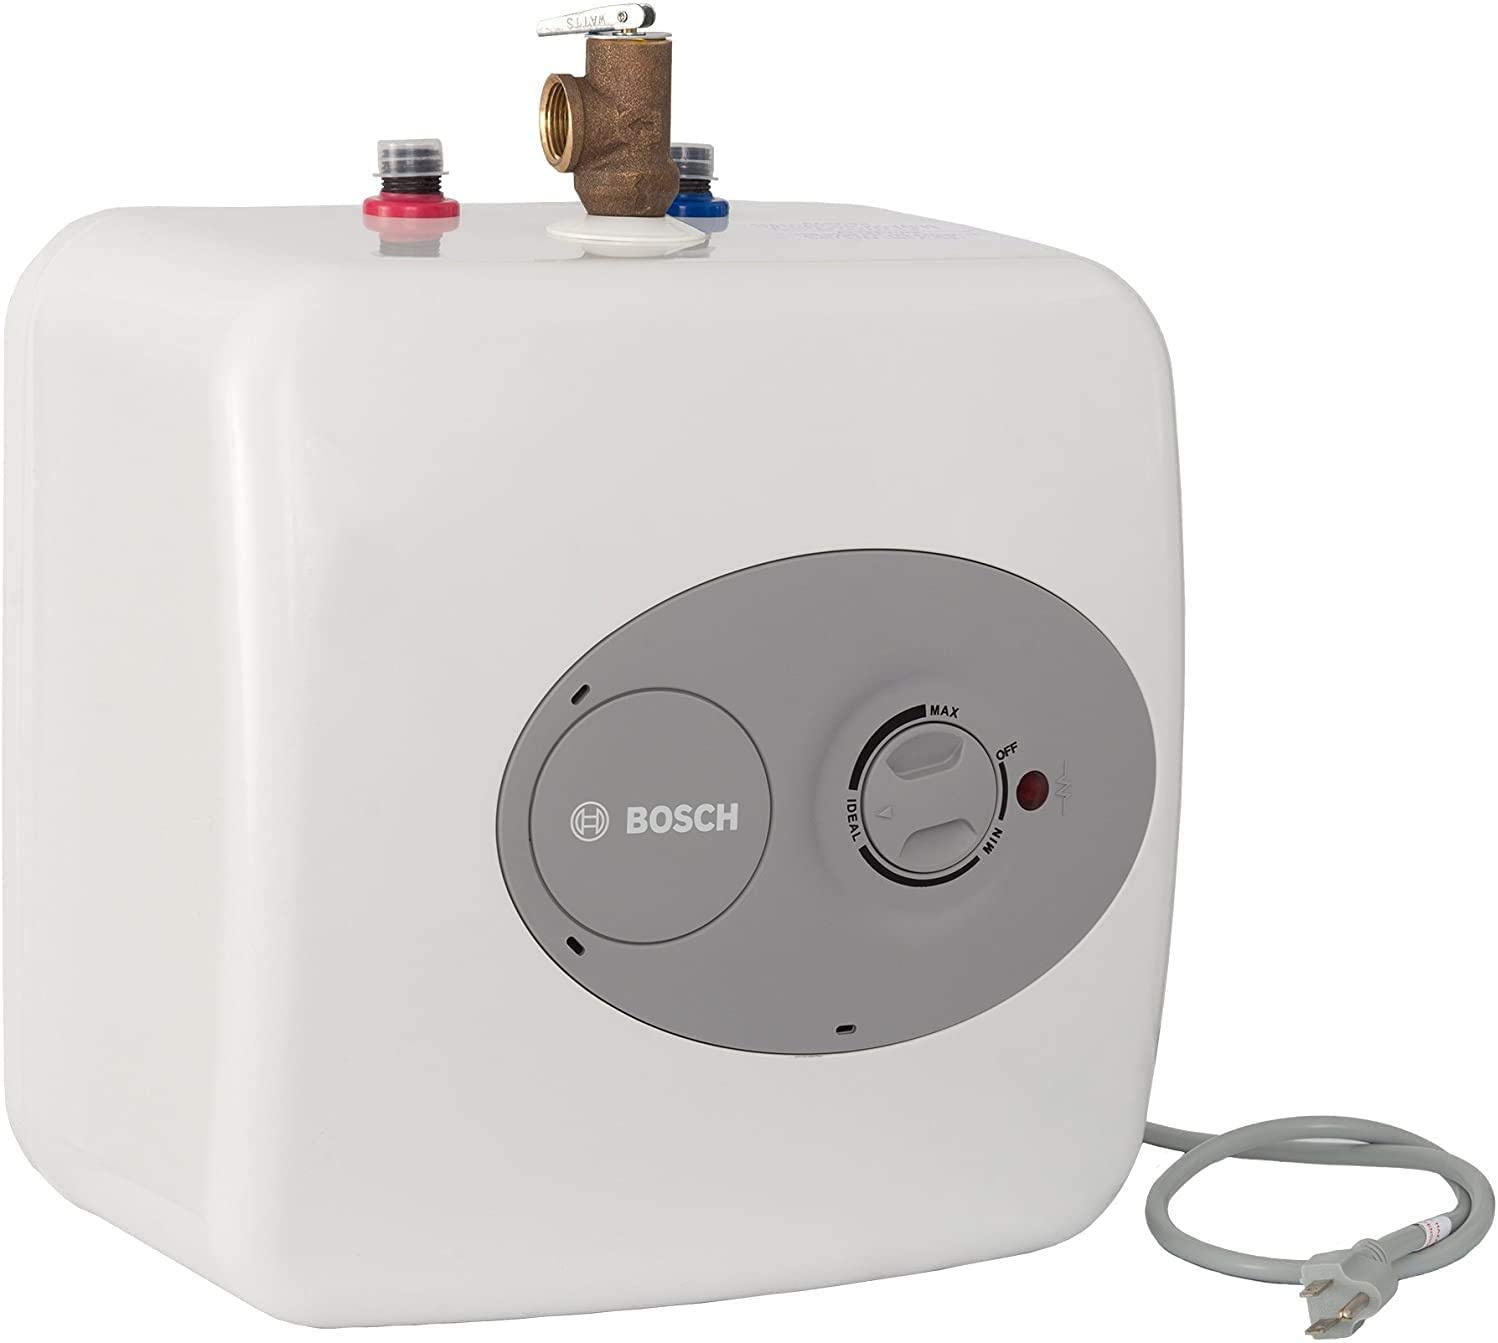 Bosch Electric Mini Tank Water Heater Tronic 3000 T 4 Gallon